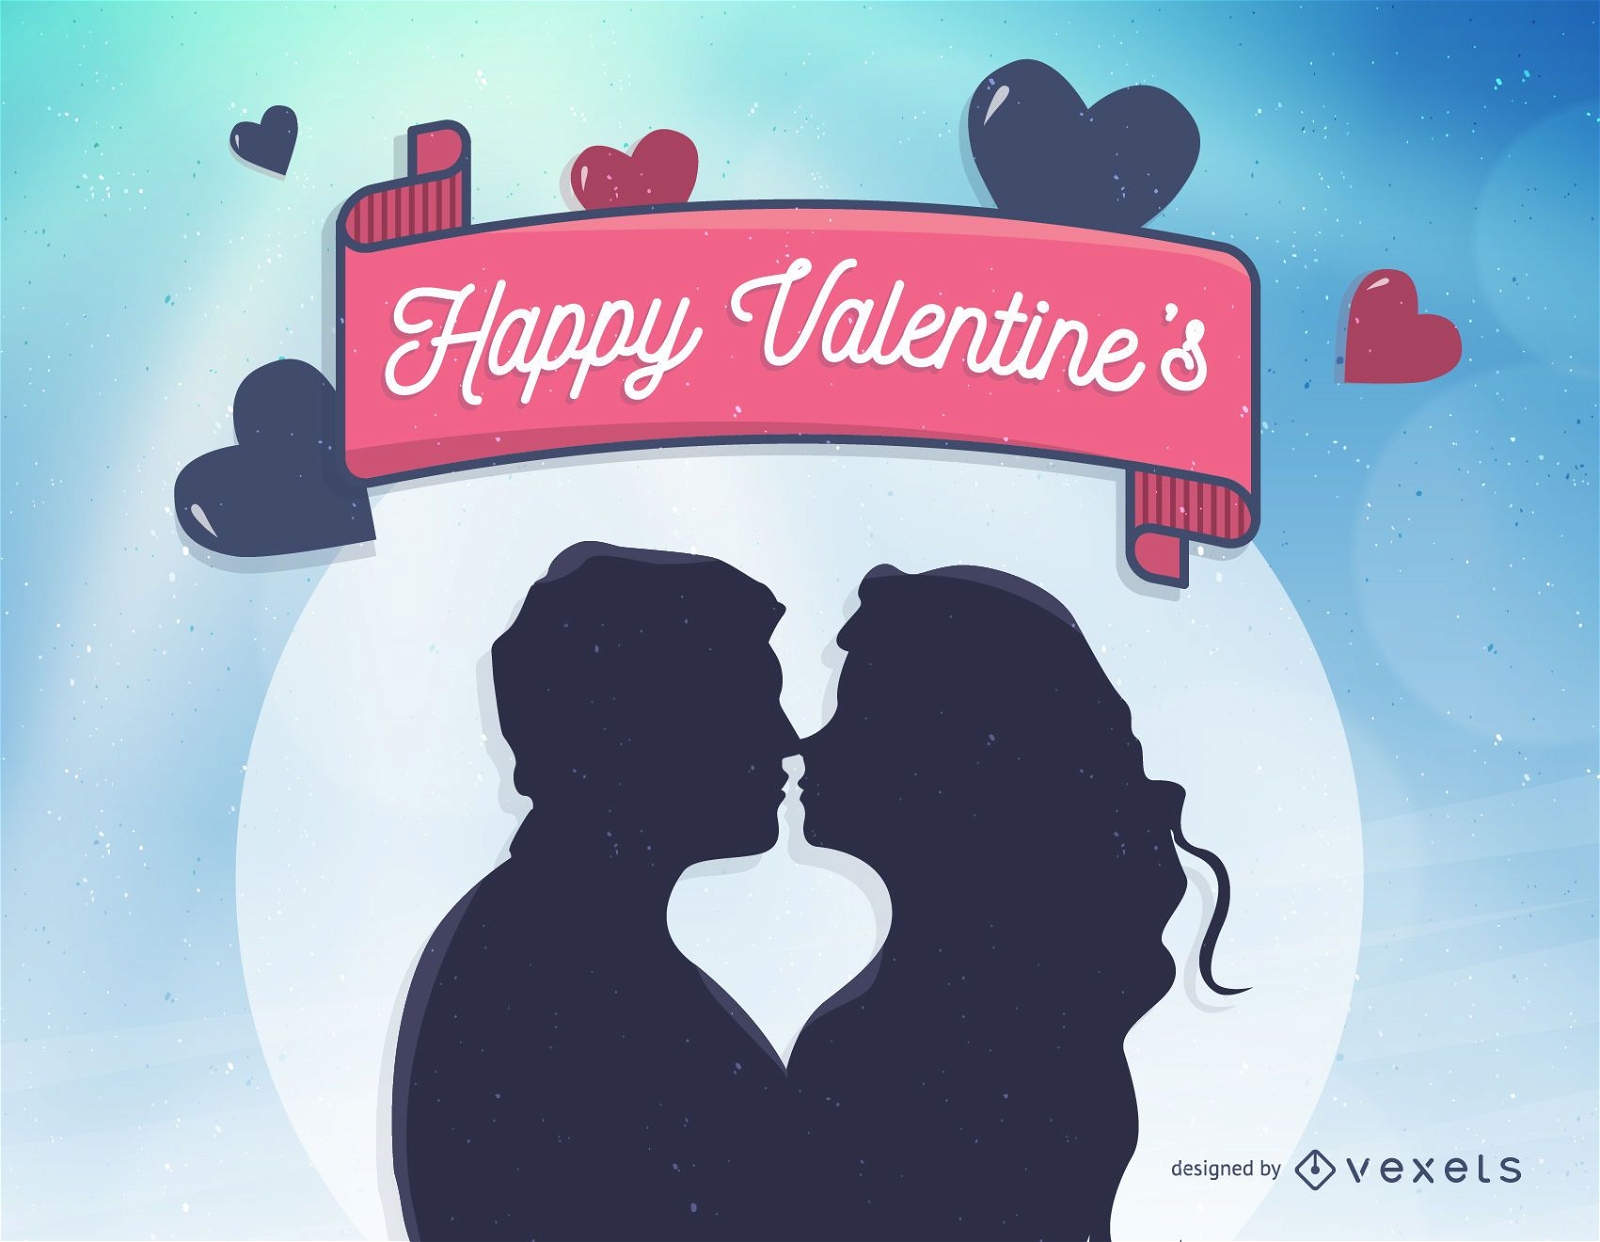 Happy Valentine's illustration with couple